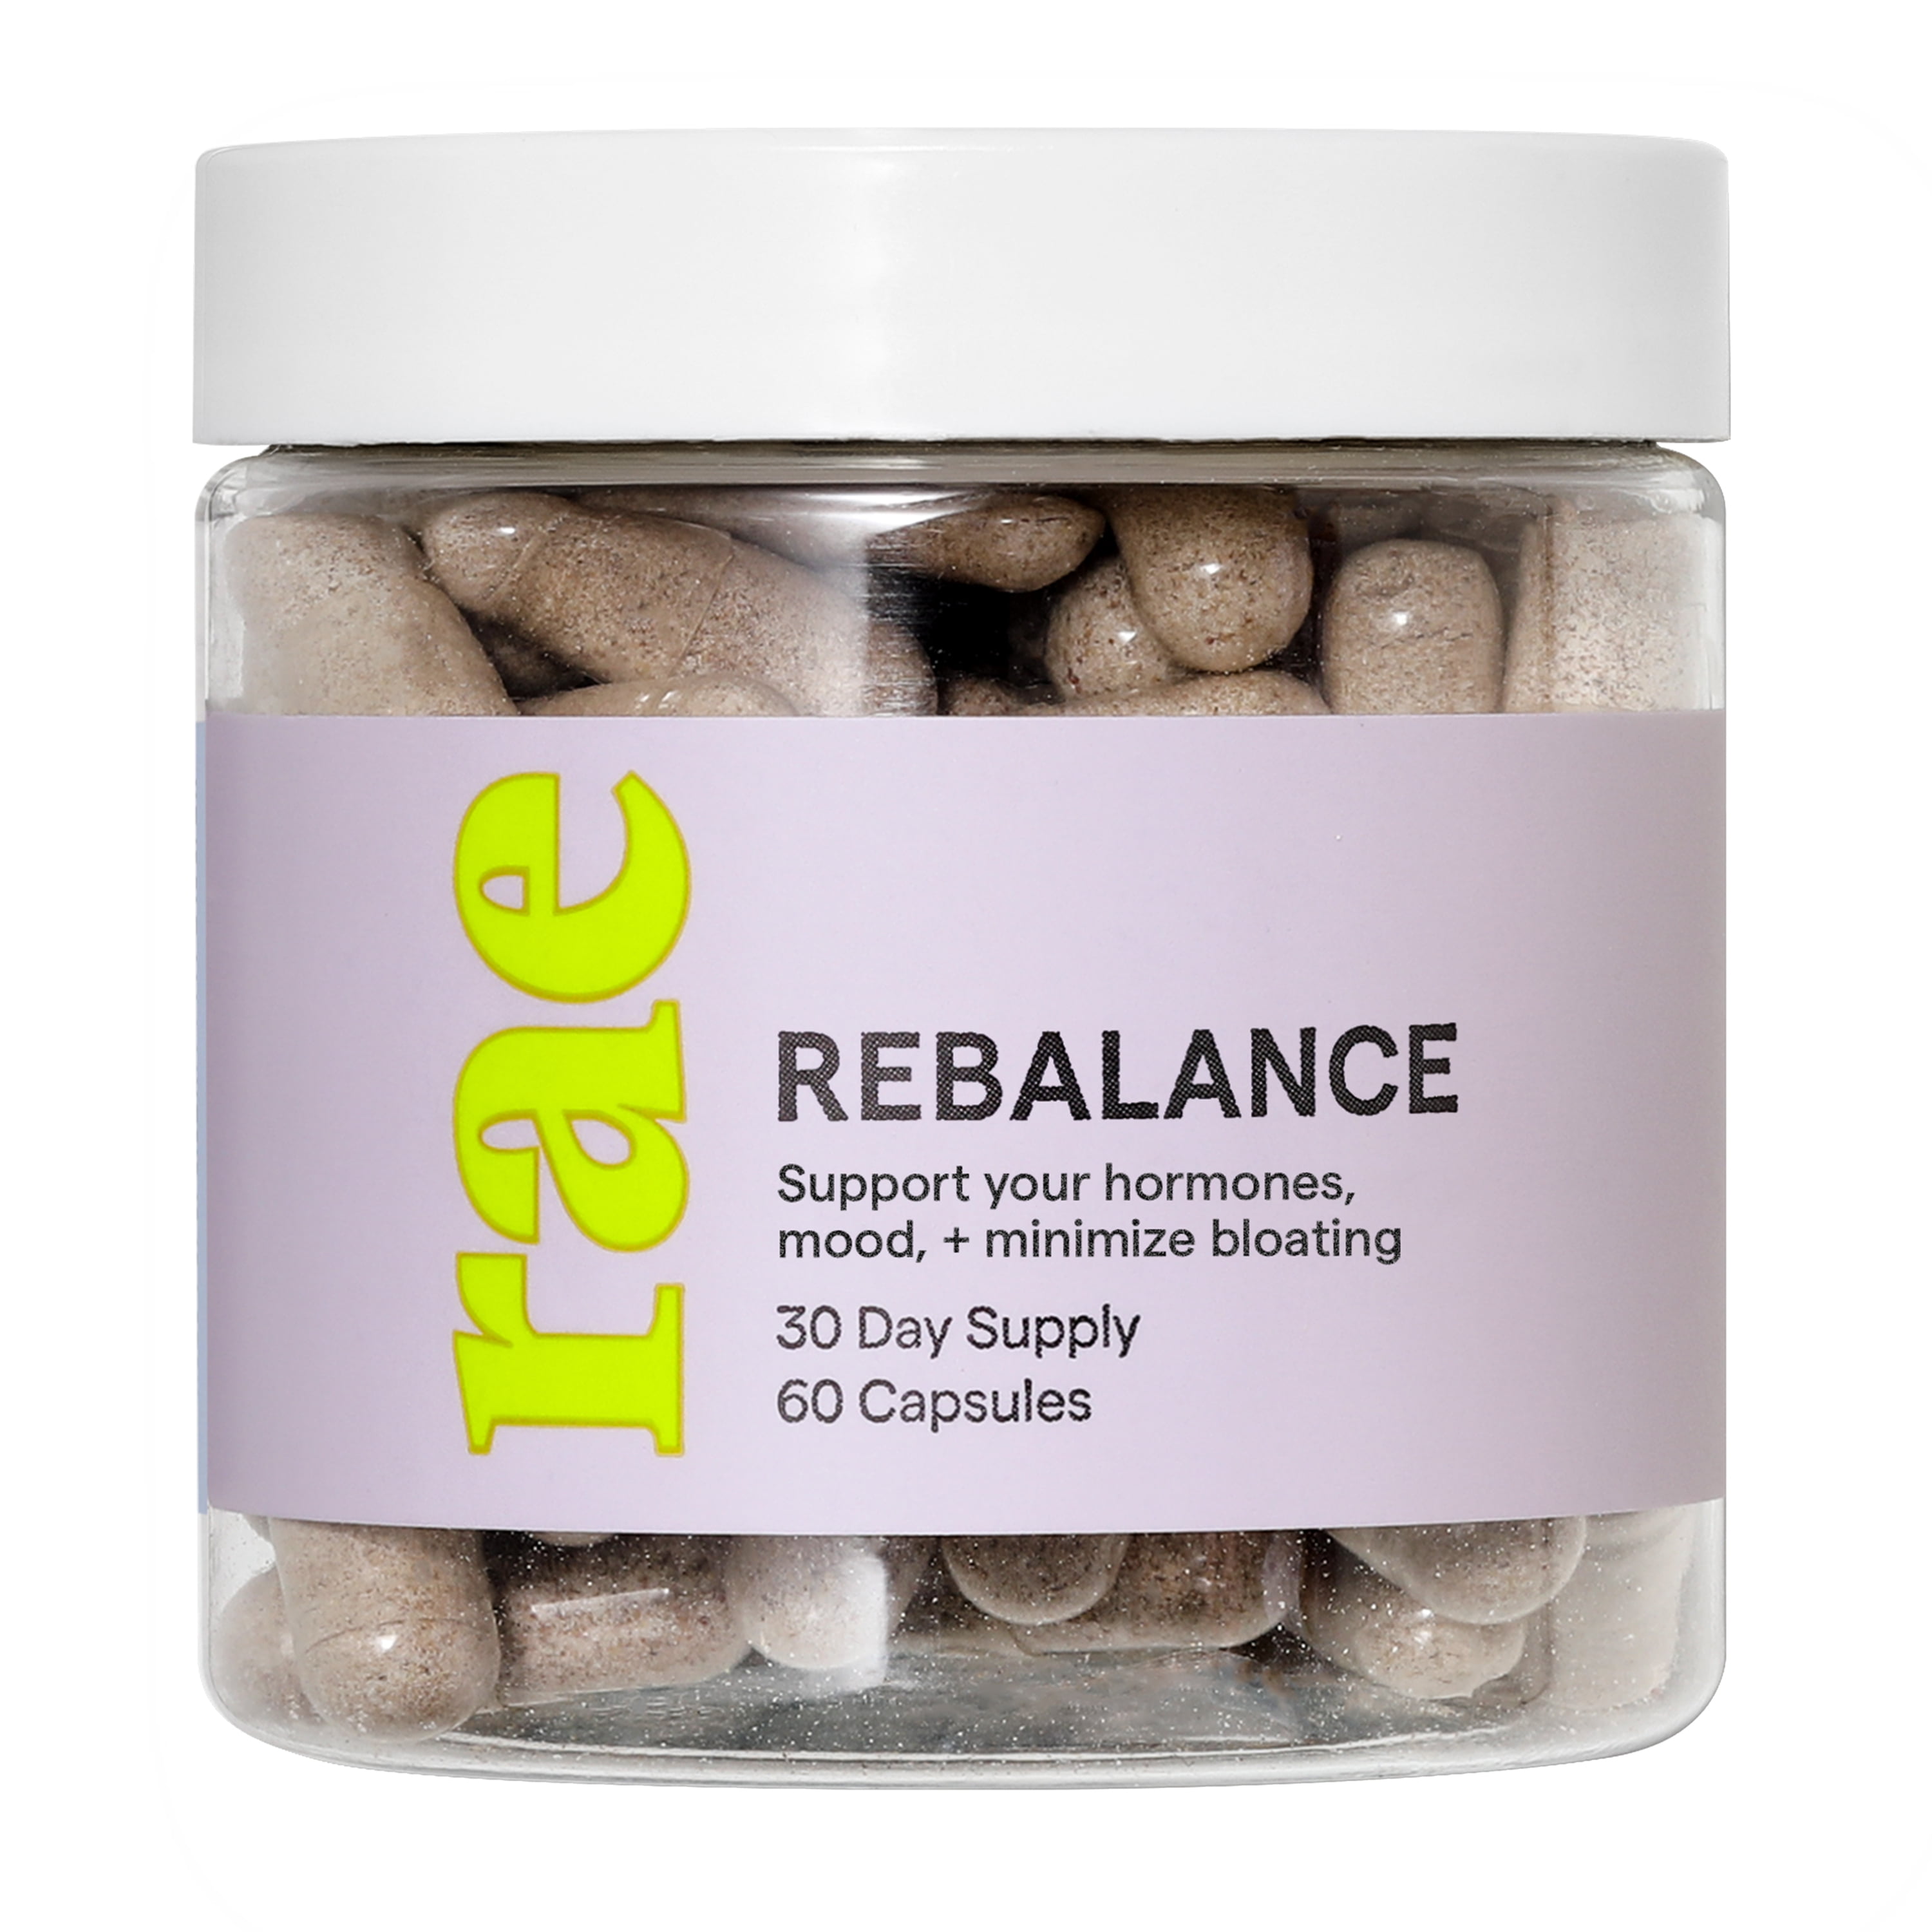 Rae Rebalance with Vitamins, Cordyceps, Reishi, St. John's Wort, Support Hormones & Minimize Bloating, 60ct